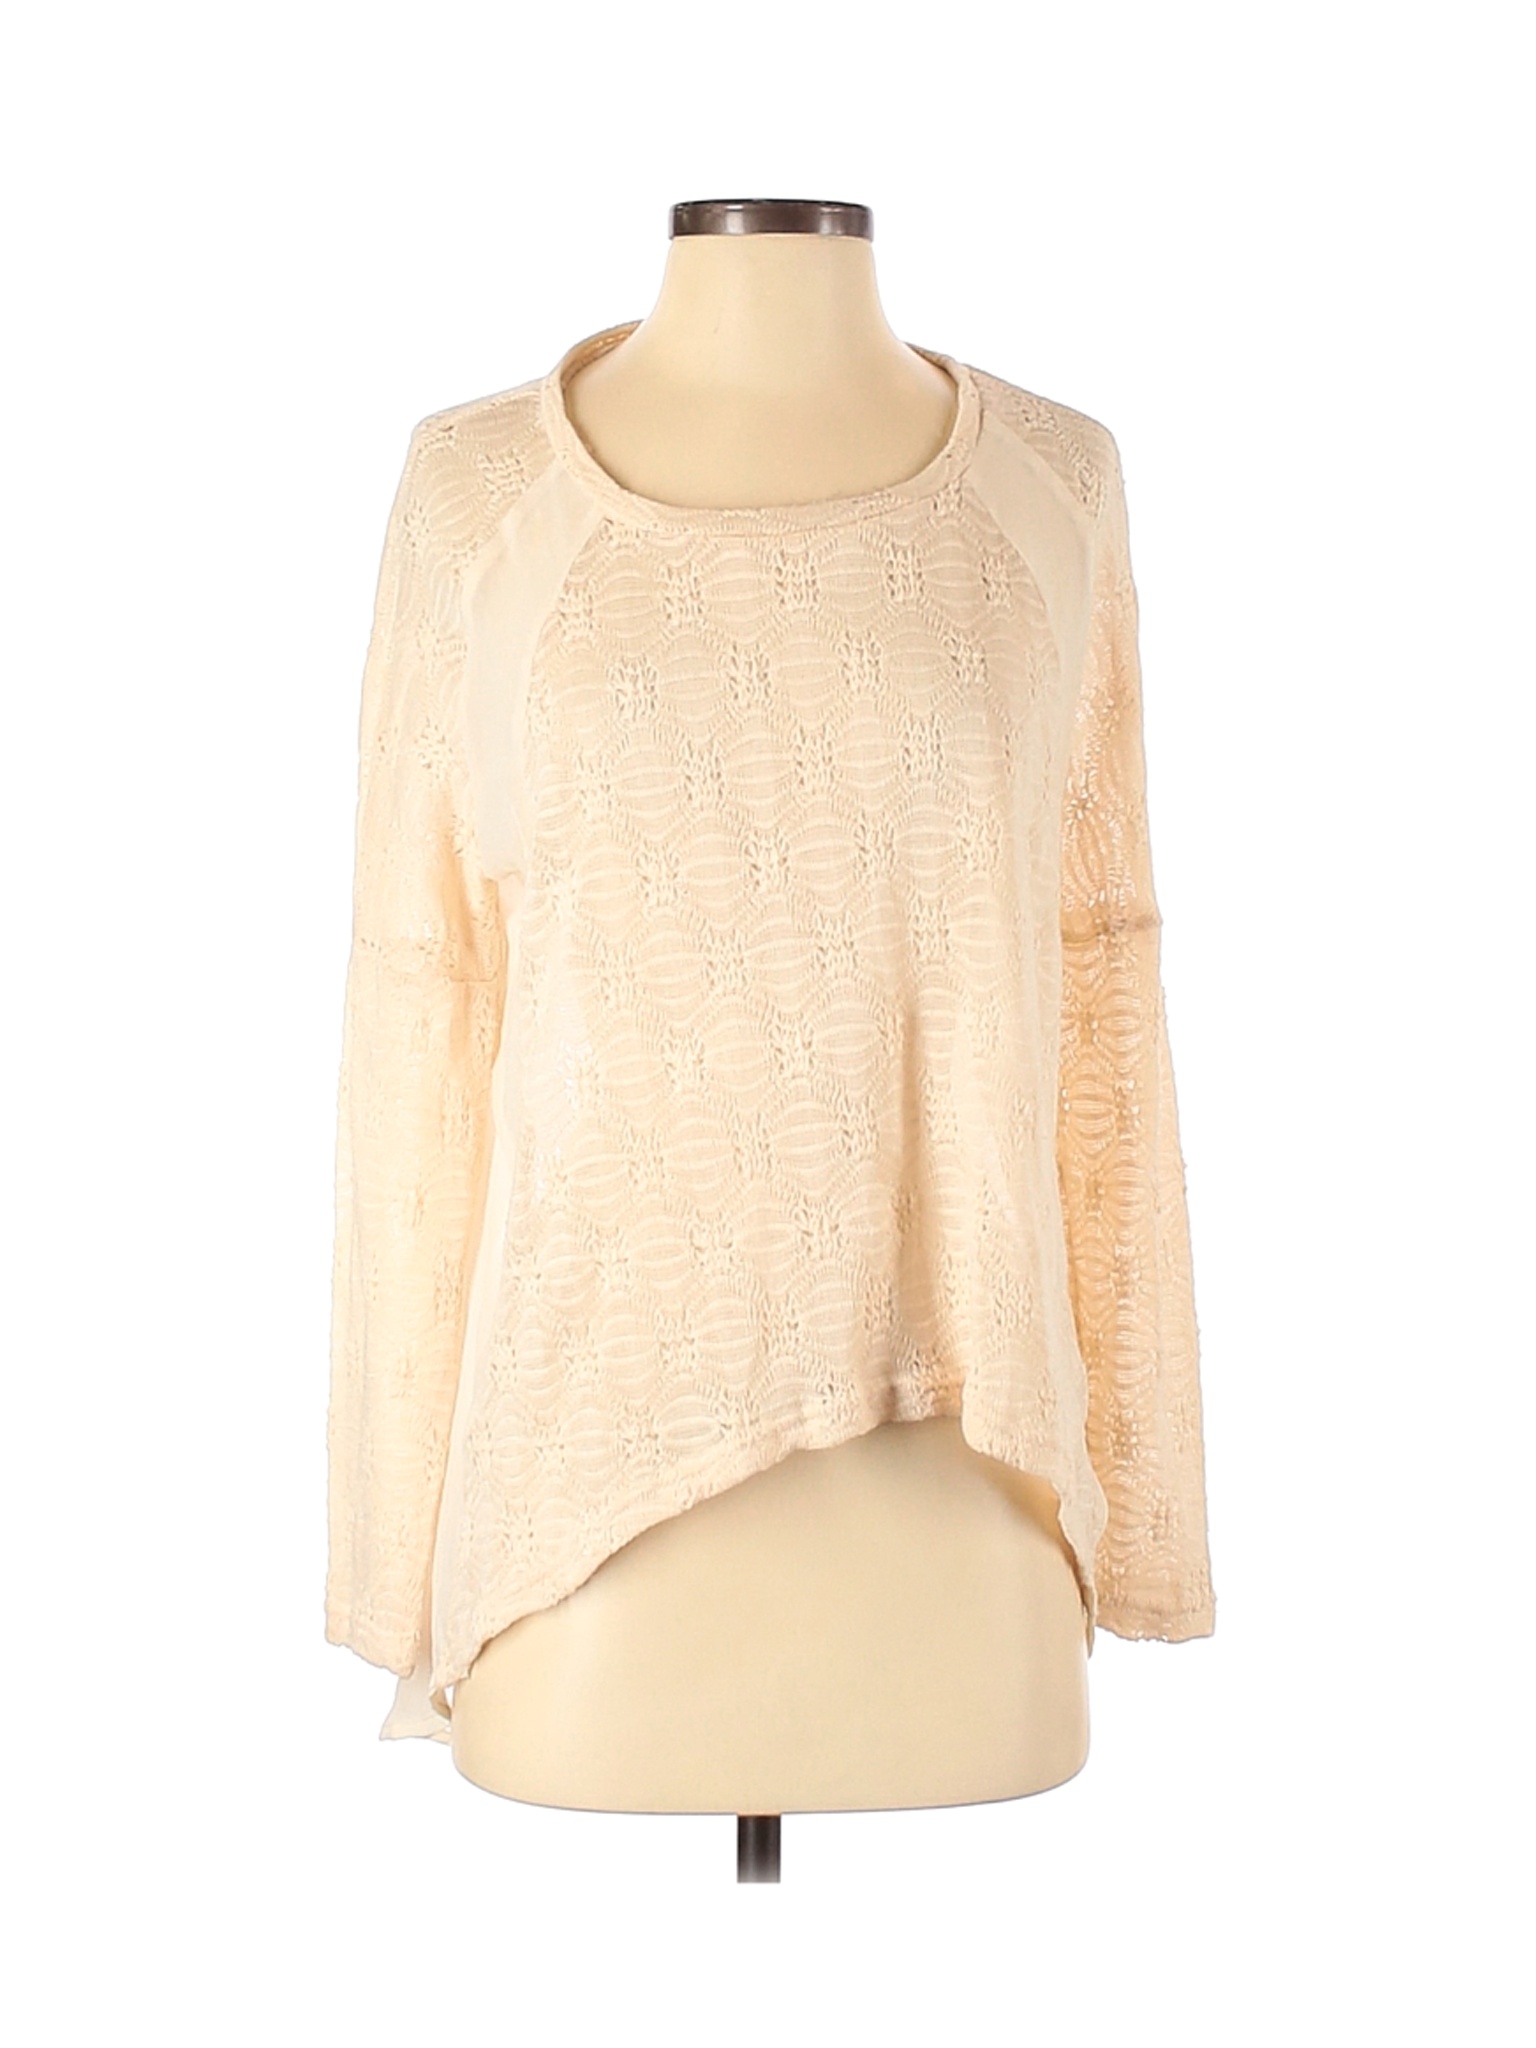 Ark & Co. Women Brown Long Sleeve Top S | eBay